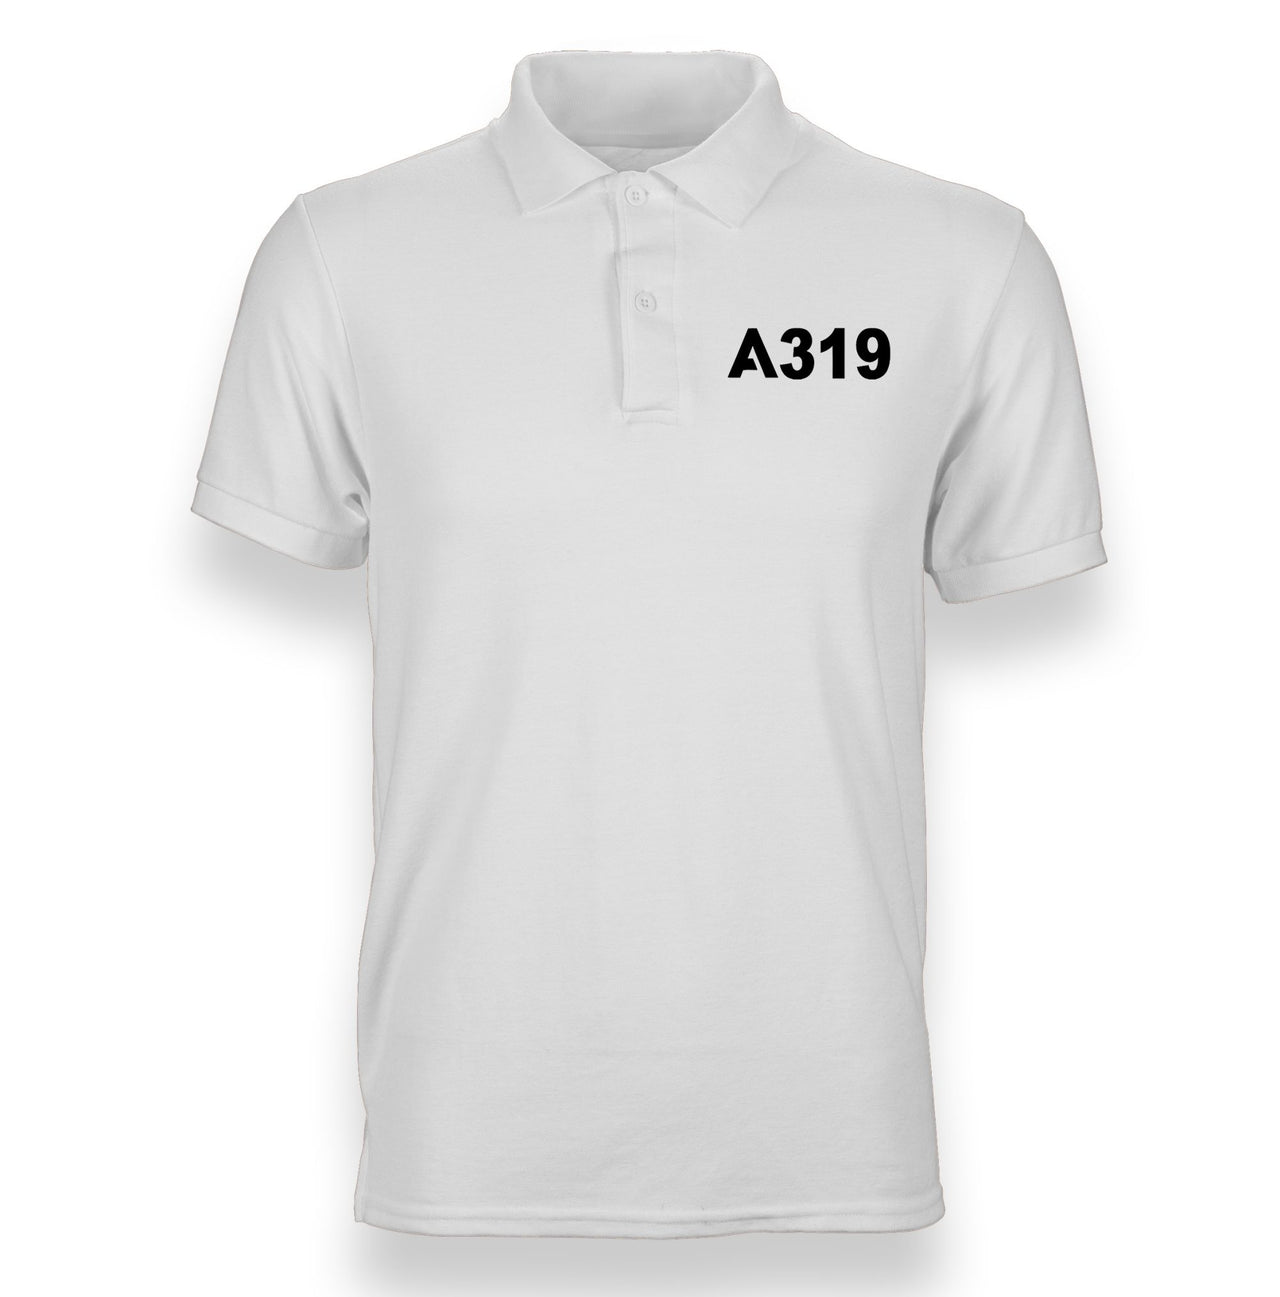 A319 Flat Text Designed "WOMEN" Polo T-Shirts